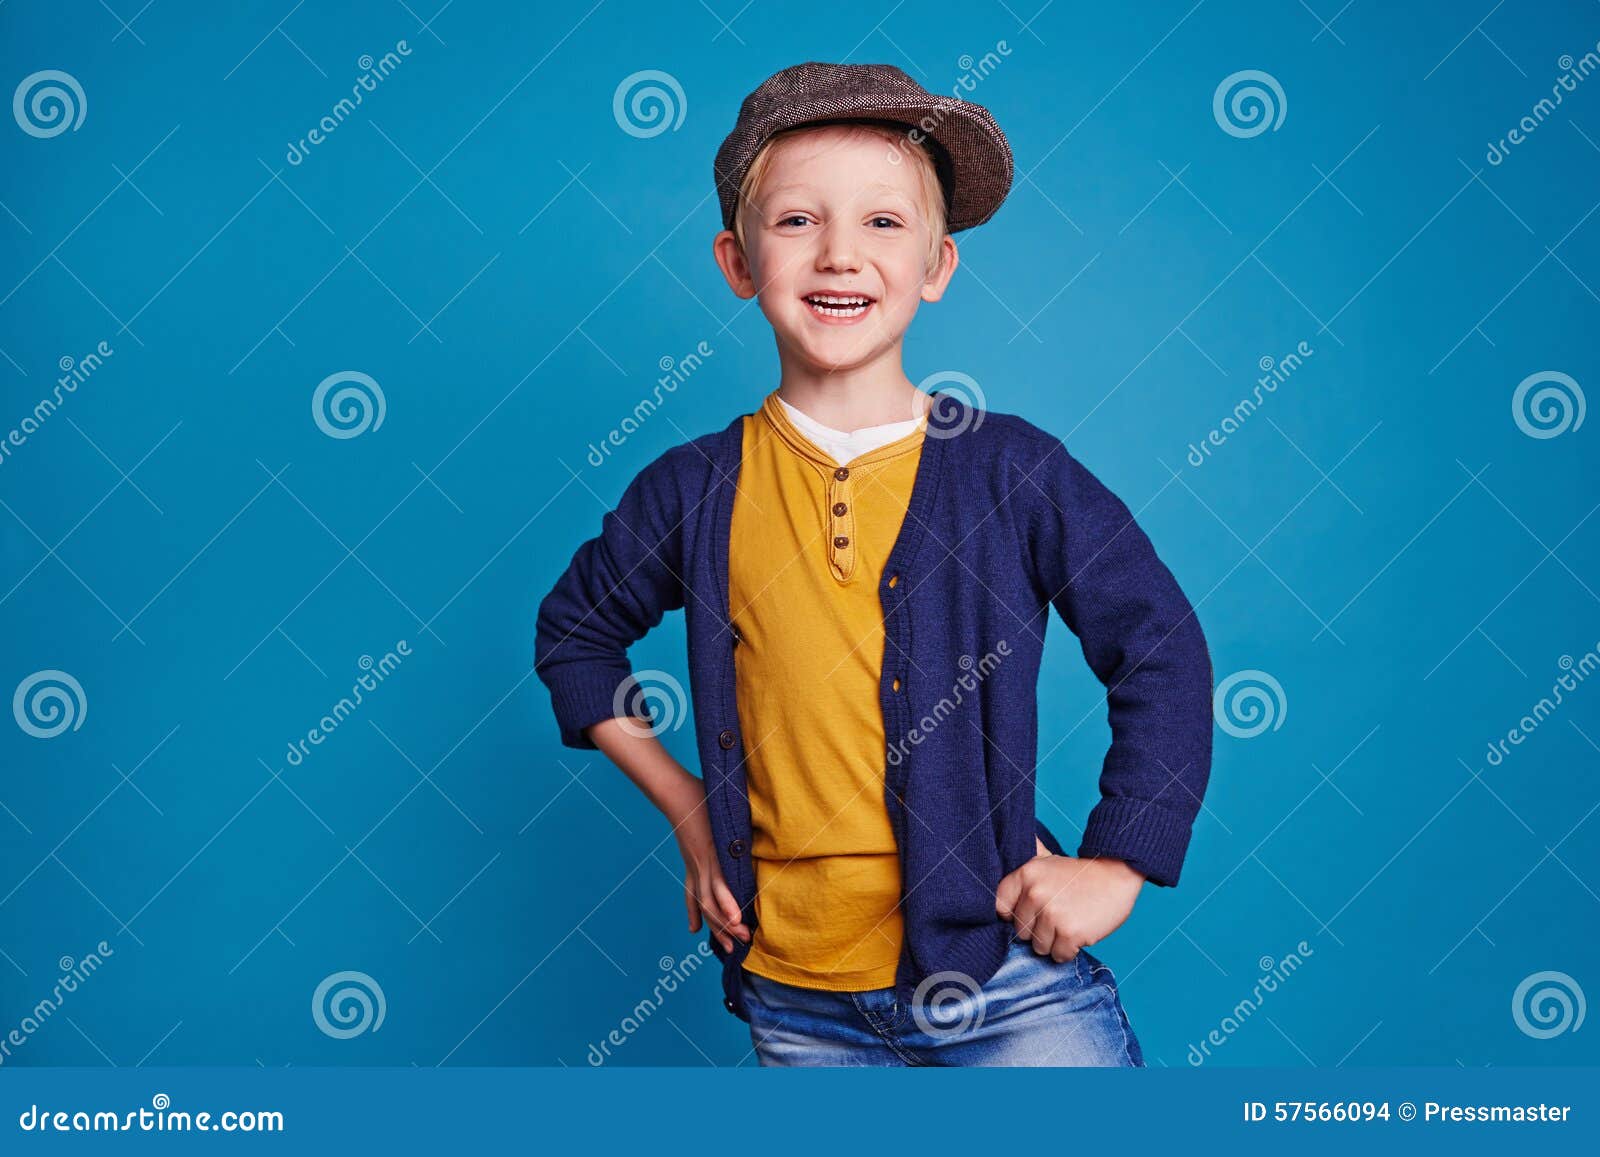 Casual boy stock photo. Image of caucasian, person, fashion - 57566094